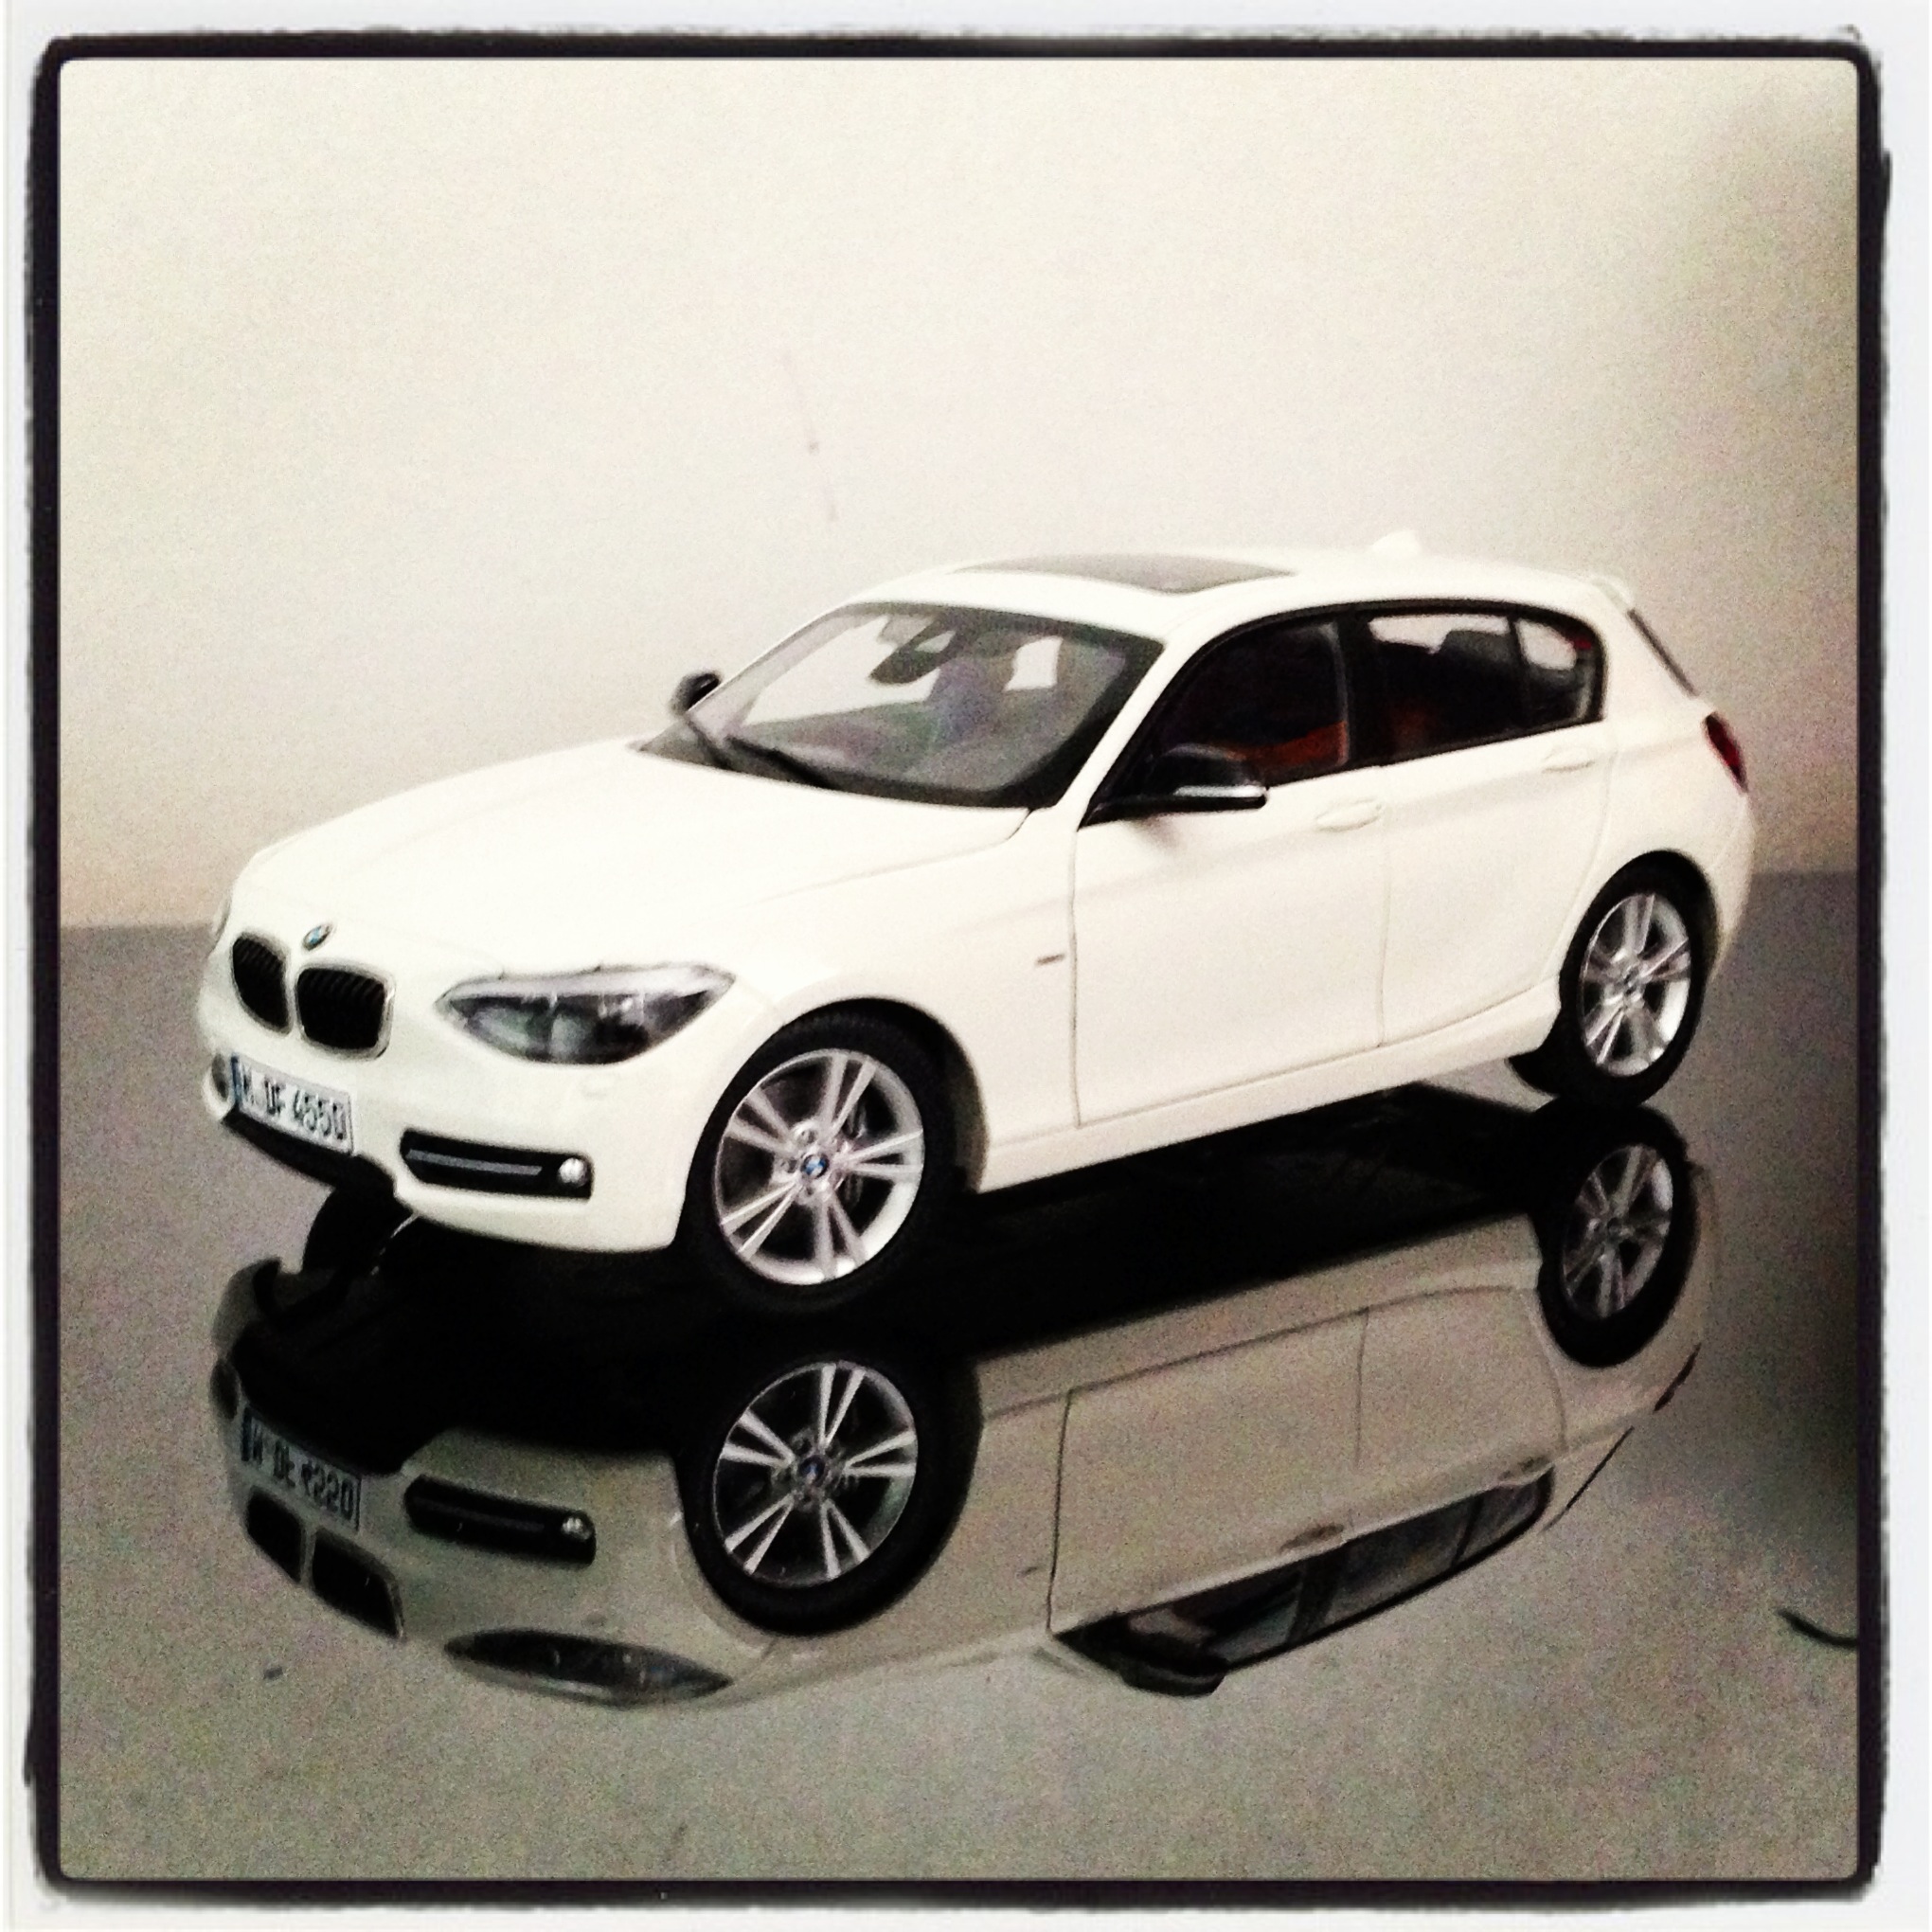 BMW 1 series (F20) 5 doors, alpine white (paragon)